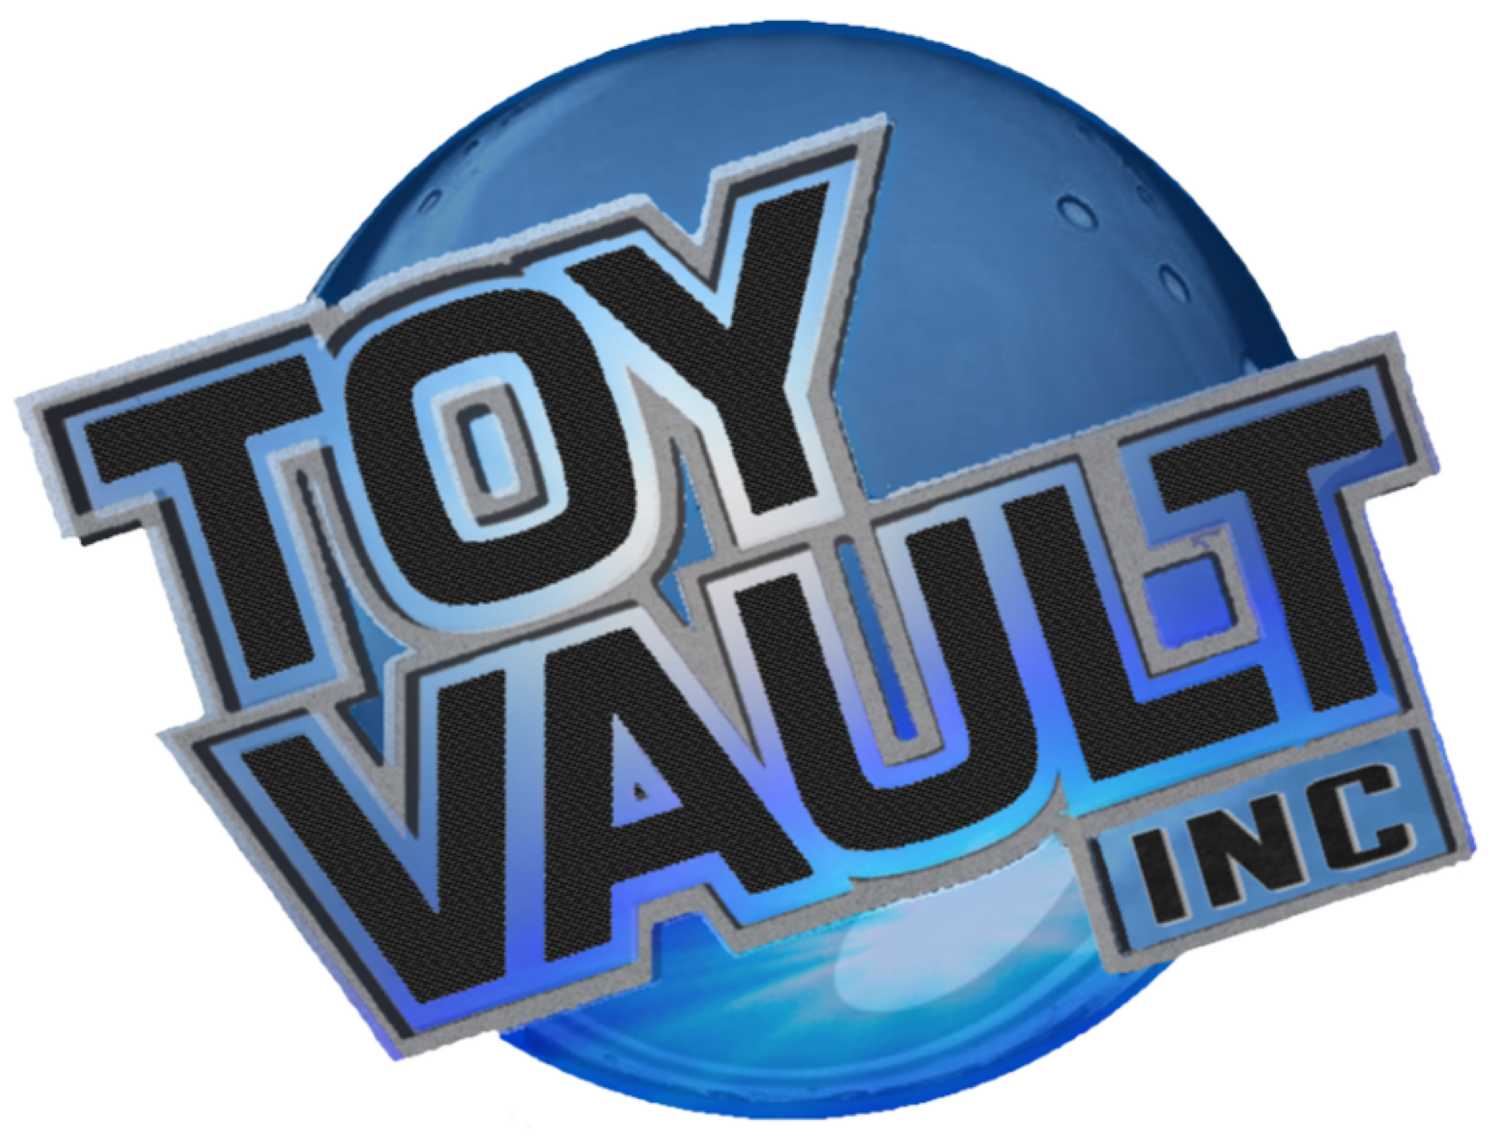  The Toy Vault